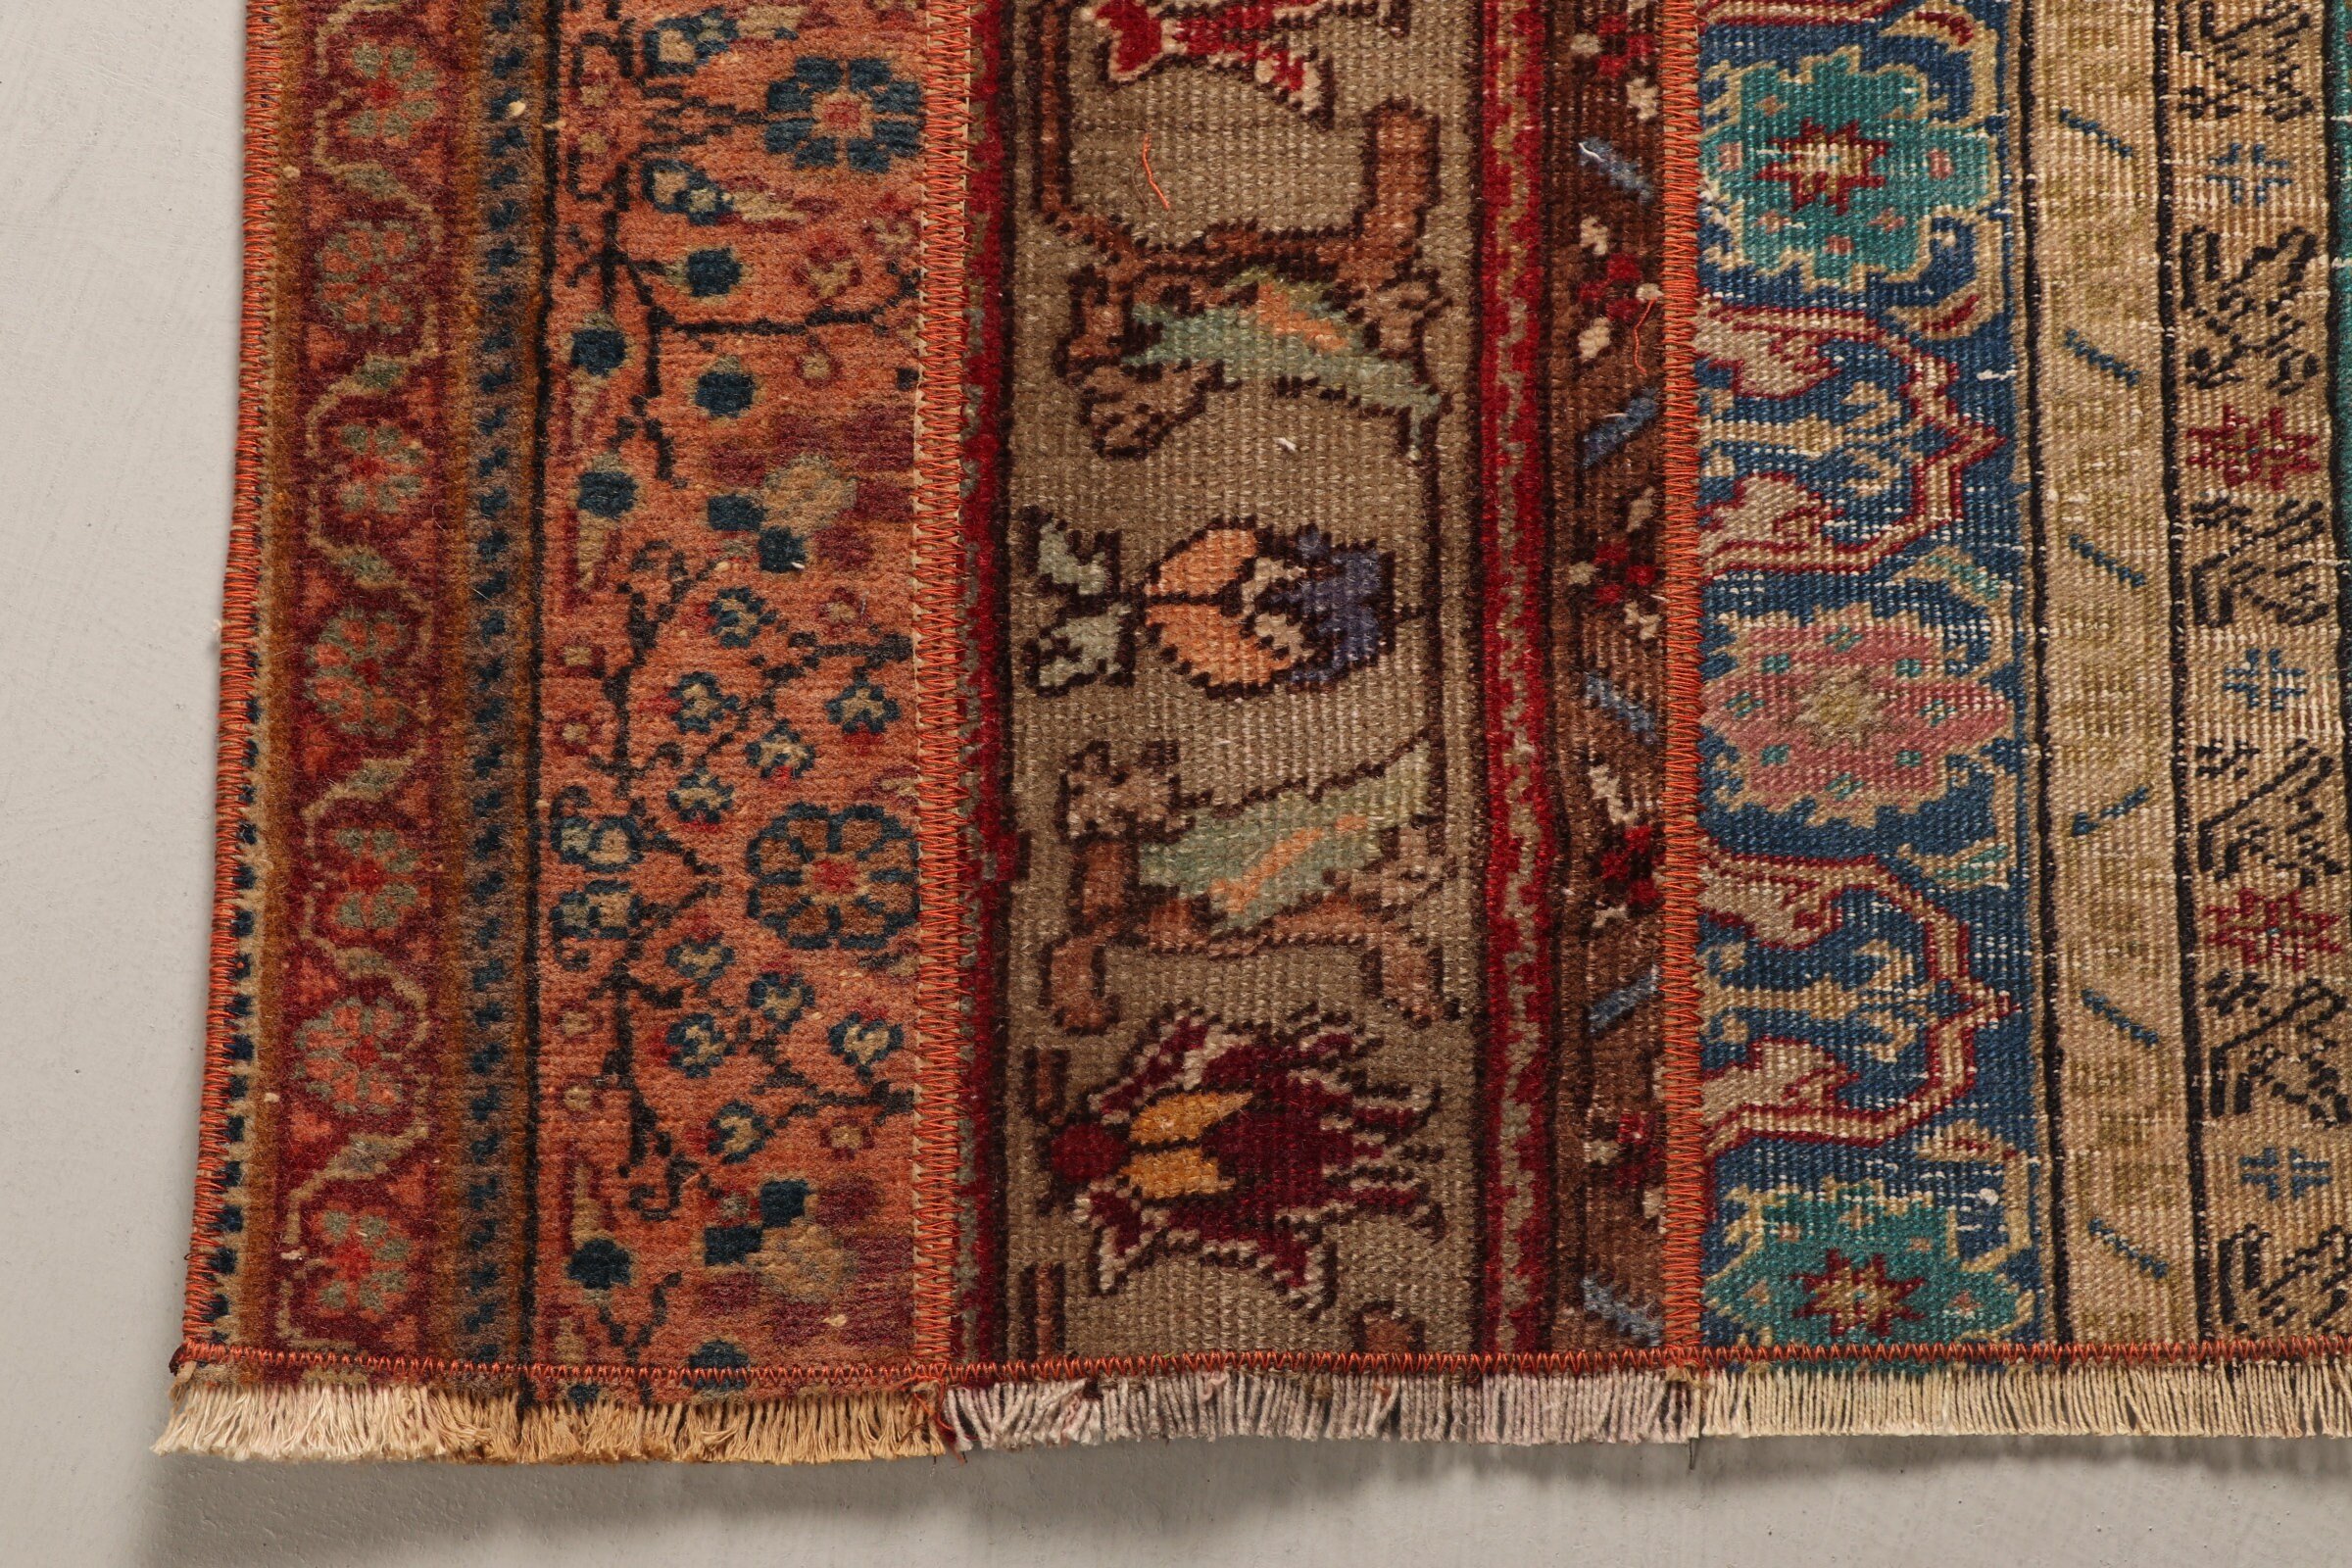 Bedroom Rug, Orange Moroccan Rug, Boho Rug, Wall Hanging Rugs, Turkish Rug, Vintage Rug, 2.6x4.9 ft Small Rug, Home Decor Rug, Entry Rugs